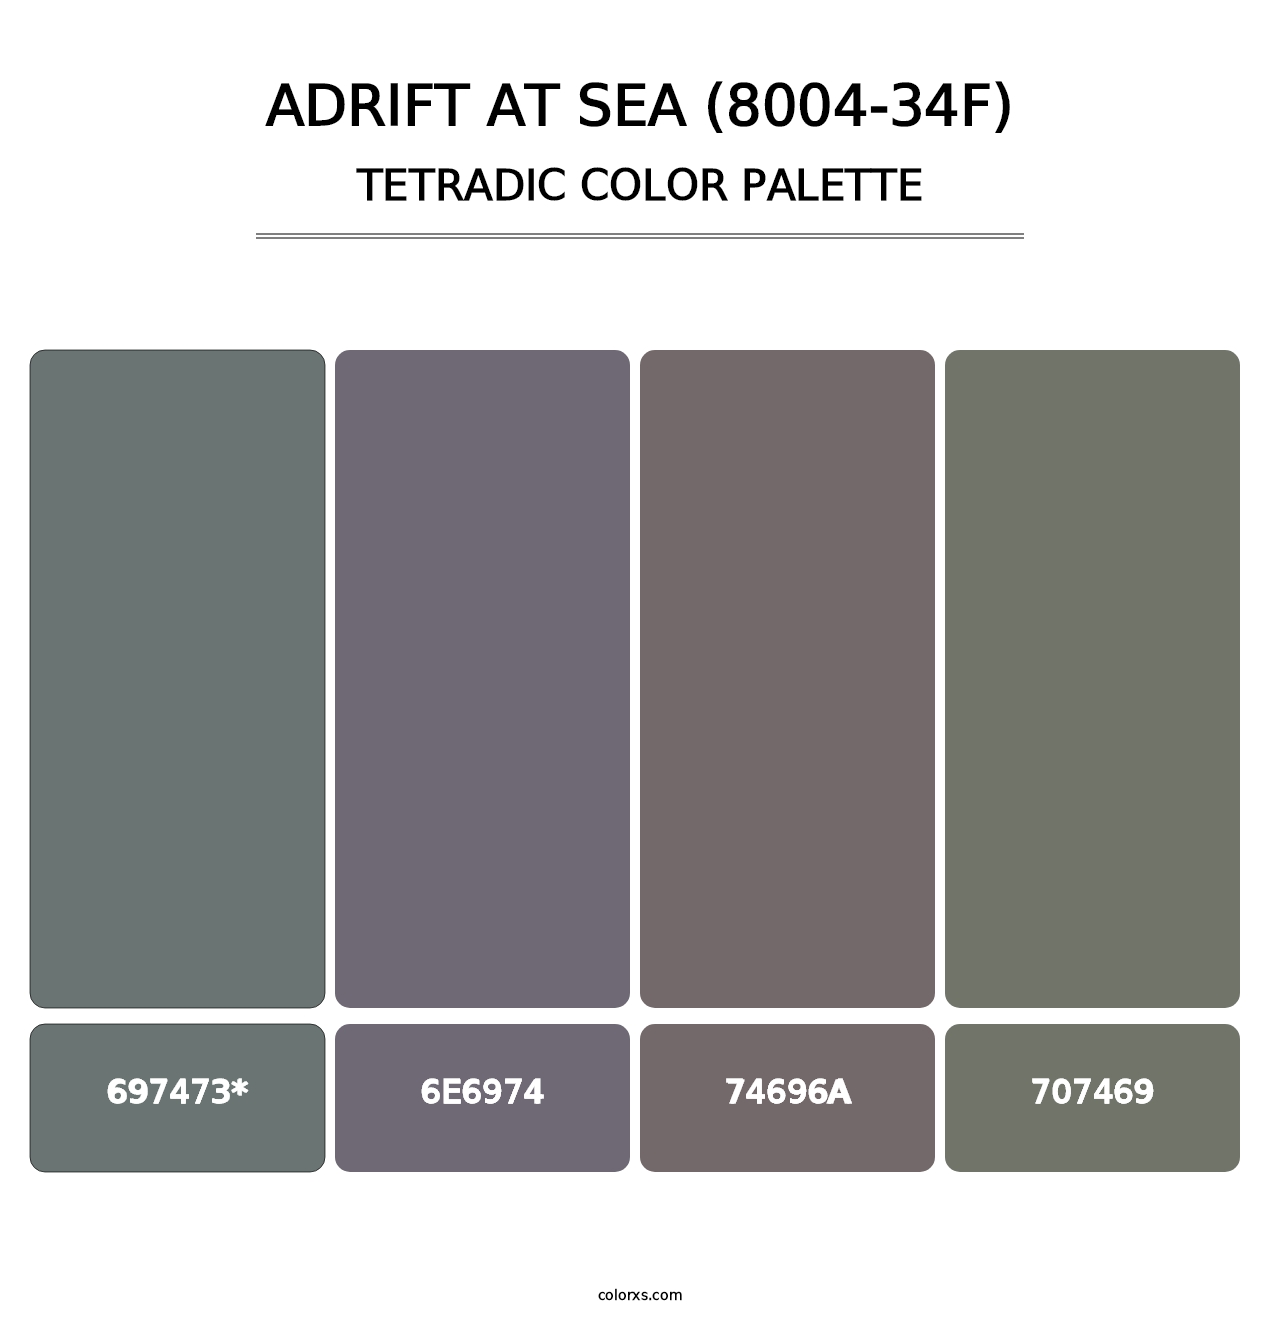 Adrift at Sea (8004-34F) - Tetradic Color Palette